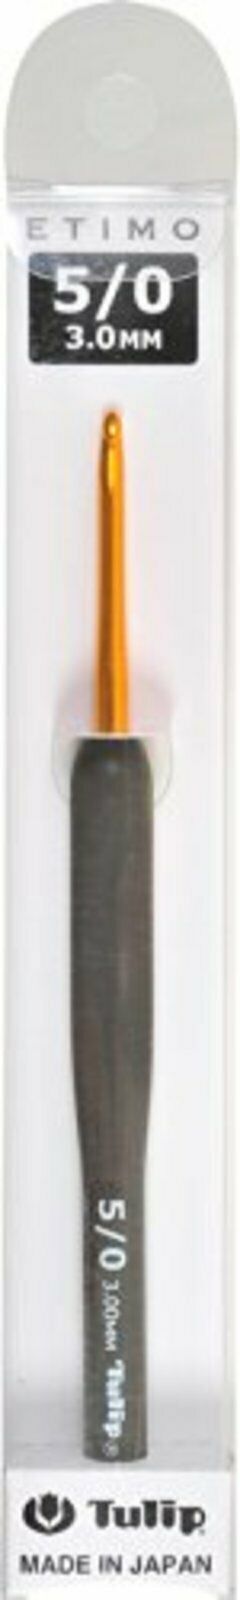 Tulip T15-500 Etimo Cushion Grip Crochet Hook Needle 5/0 (3.00mm) F/s W/track#